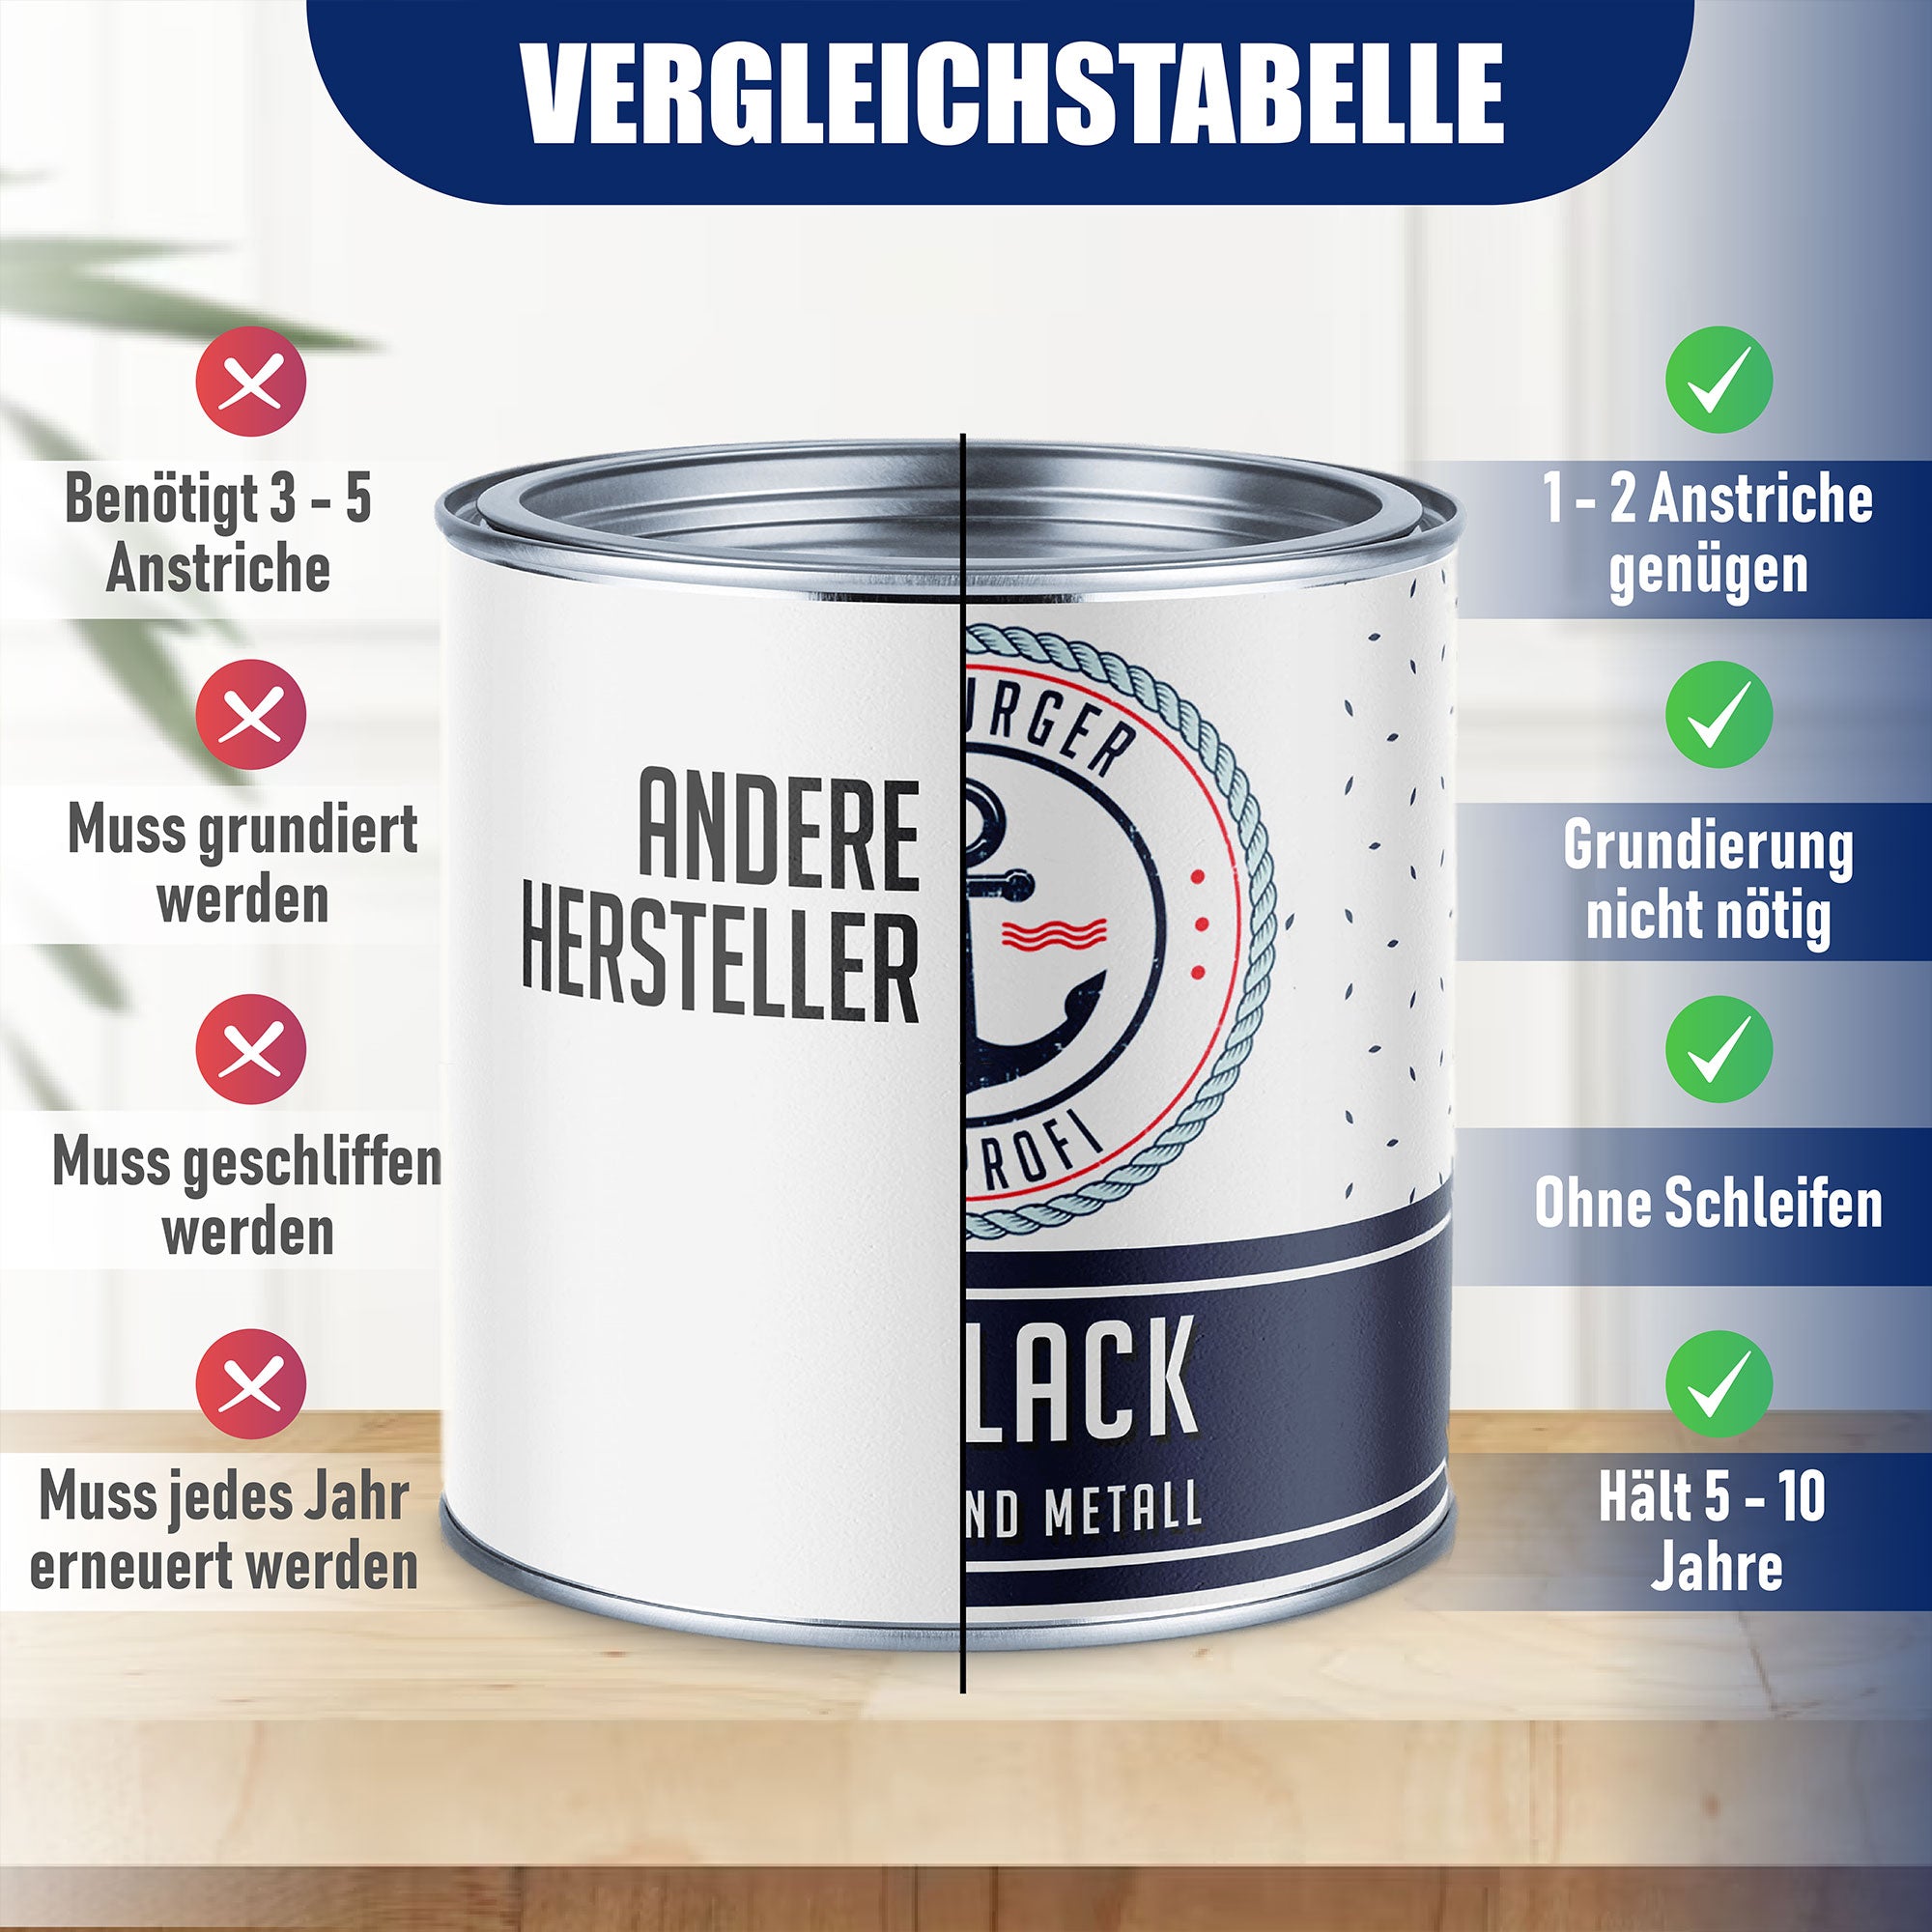 Hamburger Lack-Profi Buntlack in Stahlblau RAL 5011 mit Lackierset (X300) & Verdünnung (1 L) - 30% Sparangebot